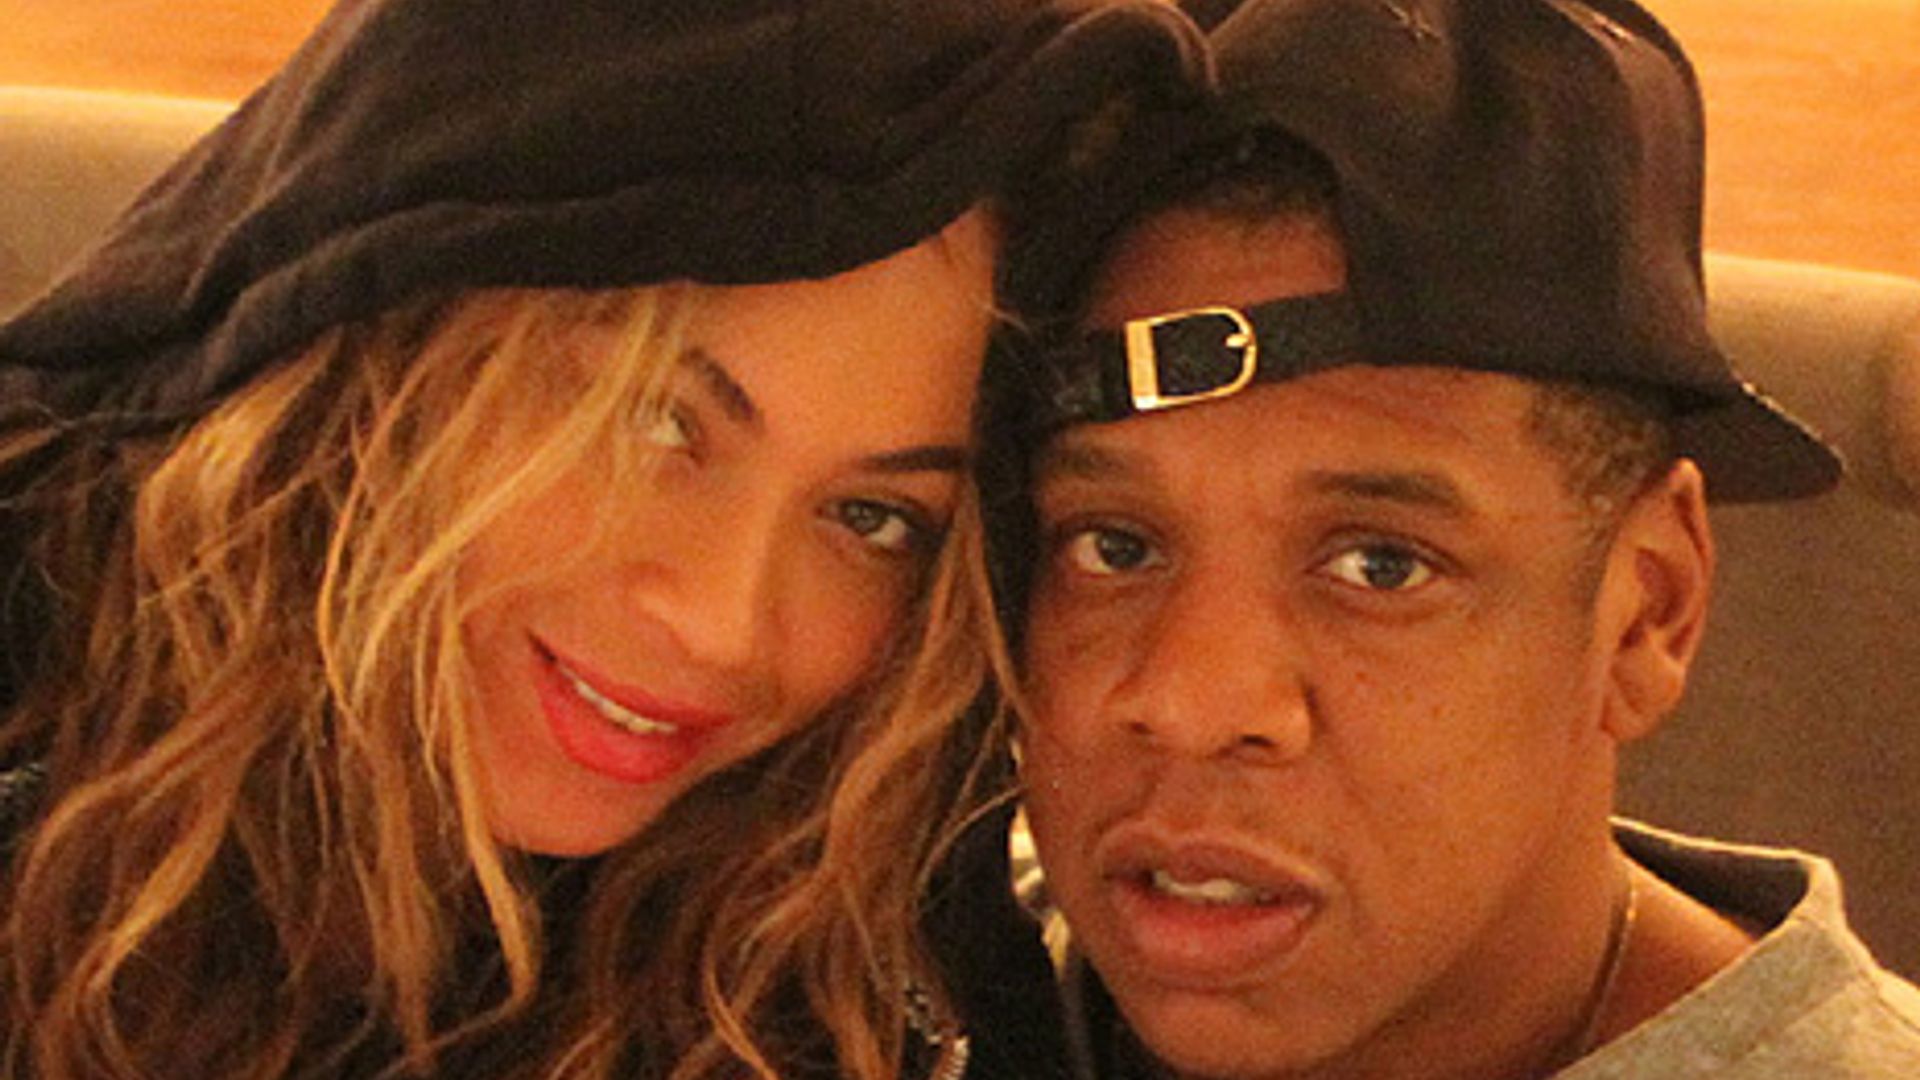 Beyoncé and Jay-Z enjoy romantic dinner date